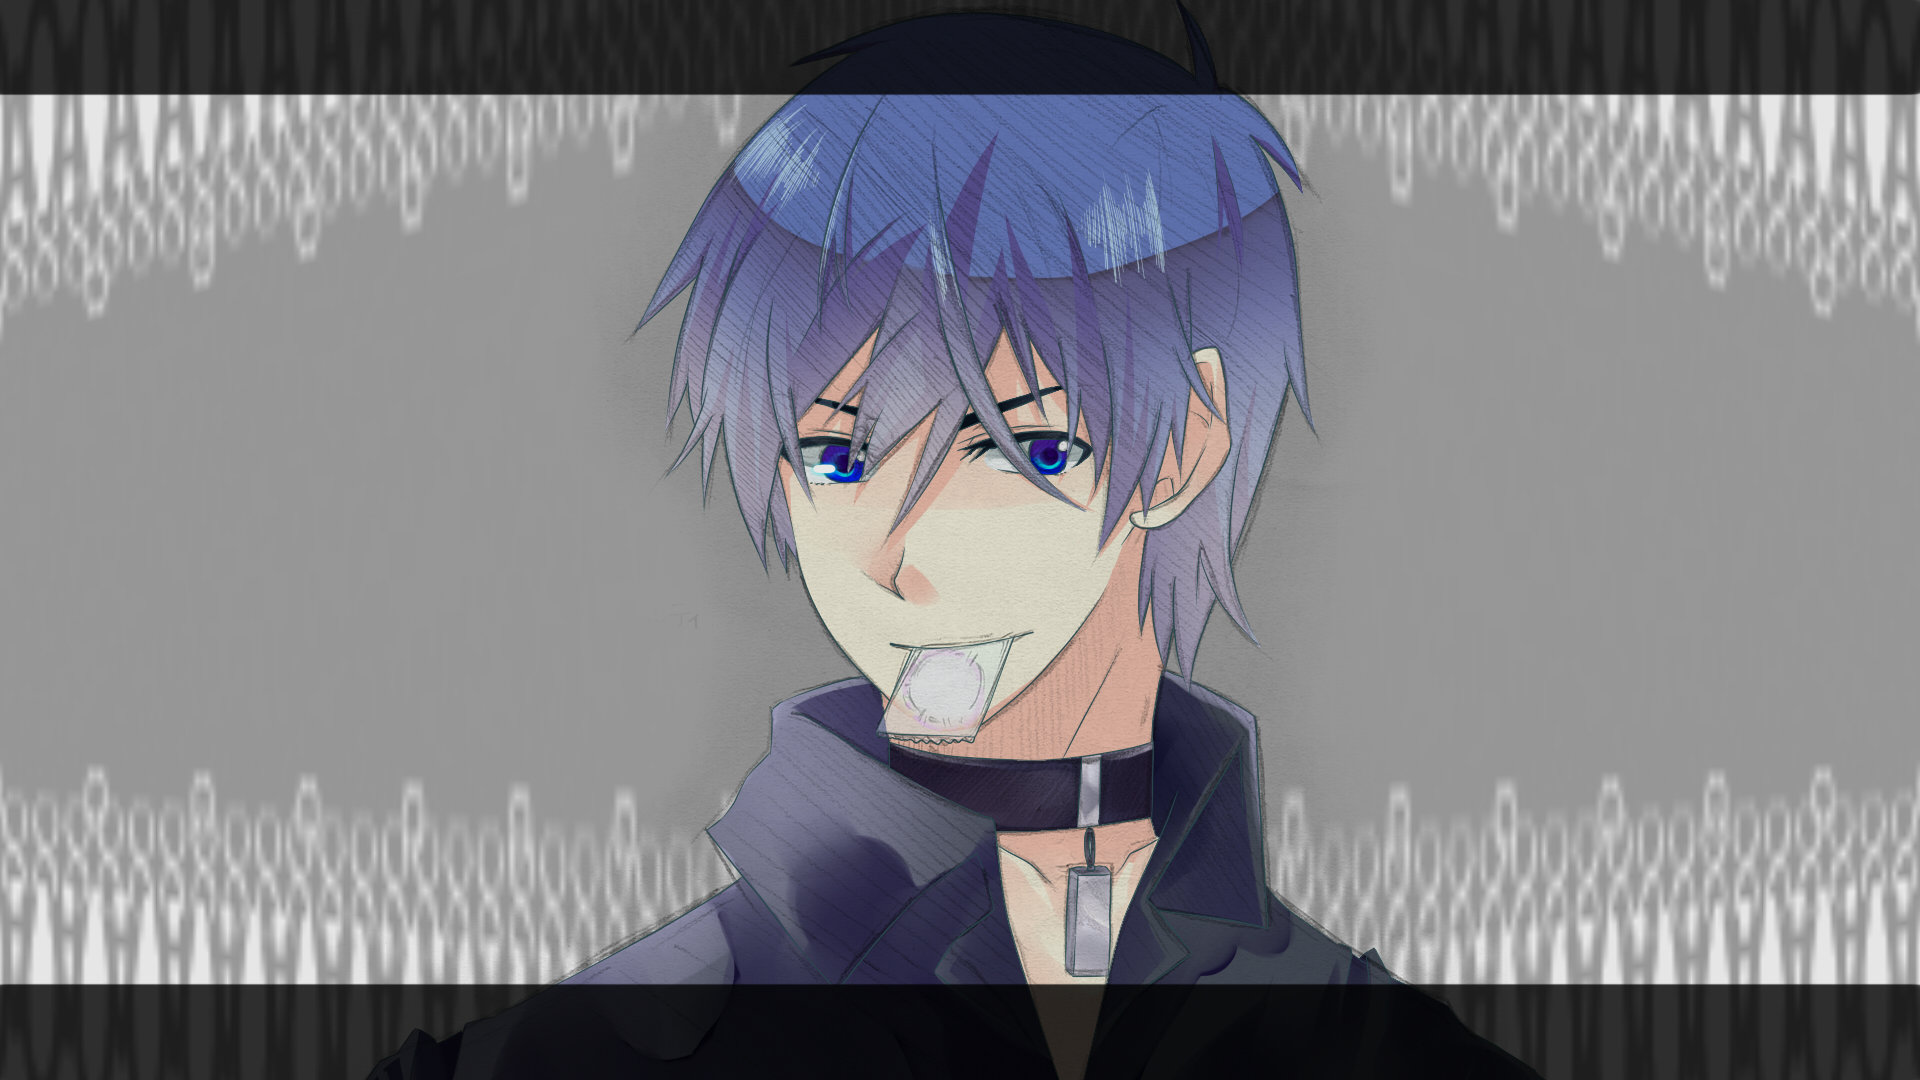 Best Kaito (Vocaloid) wallpaper ID:2947 for High Resolution 1080p desktop